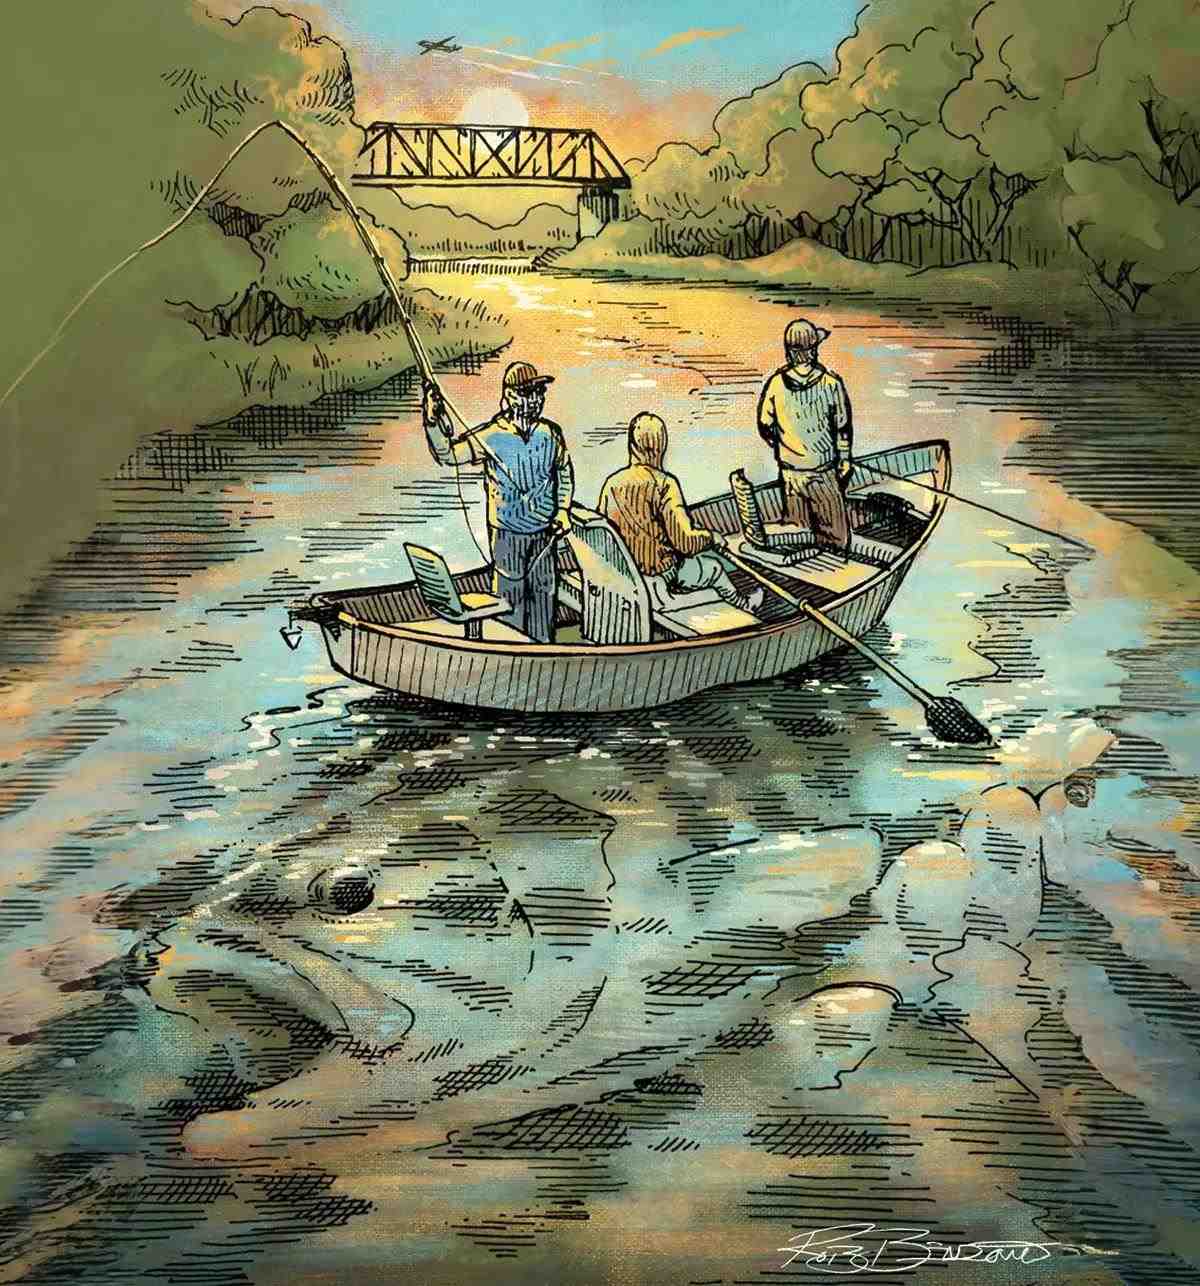 Seasonable Angler: The Journey Home